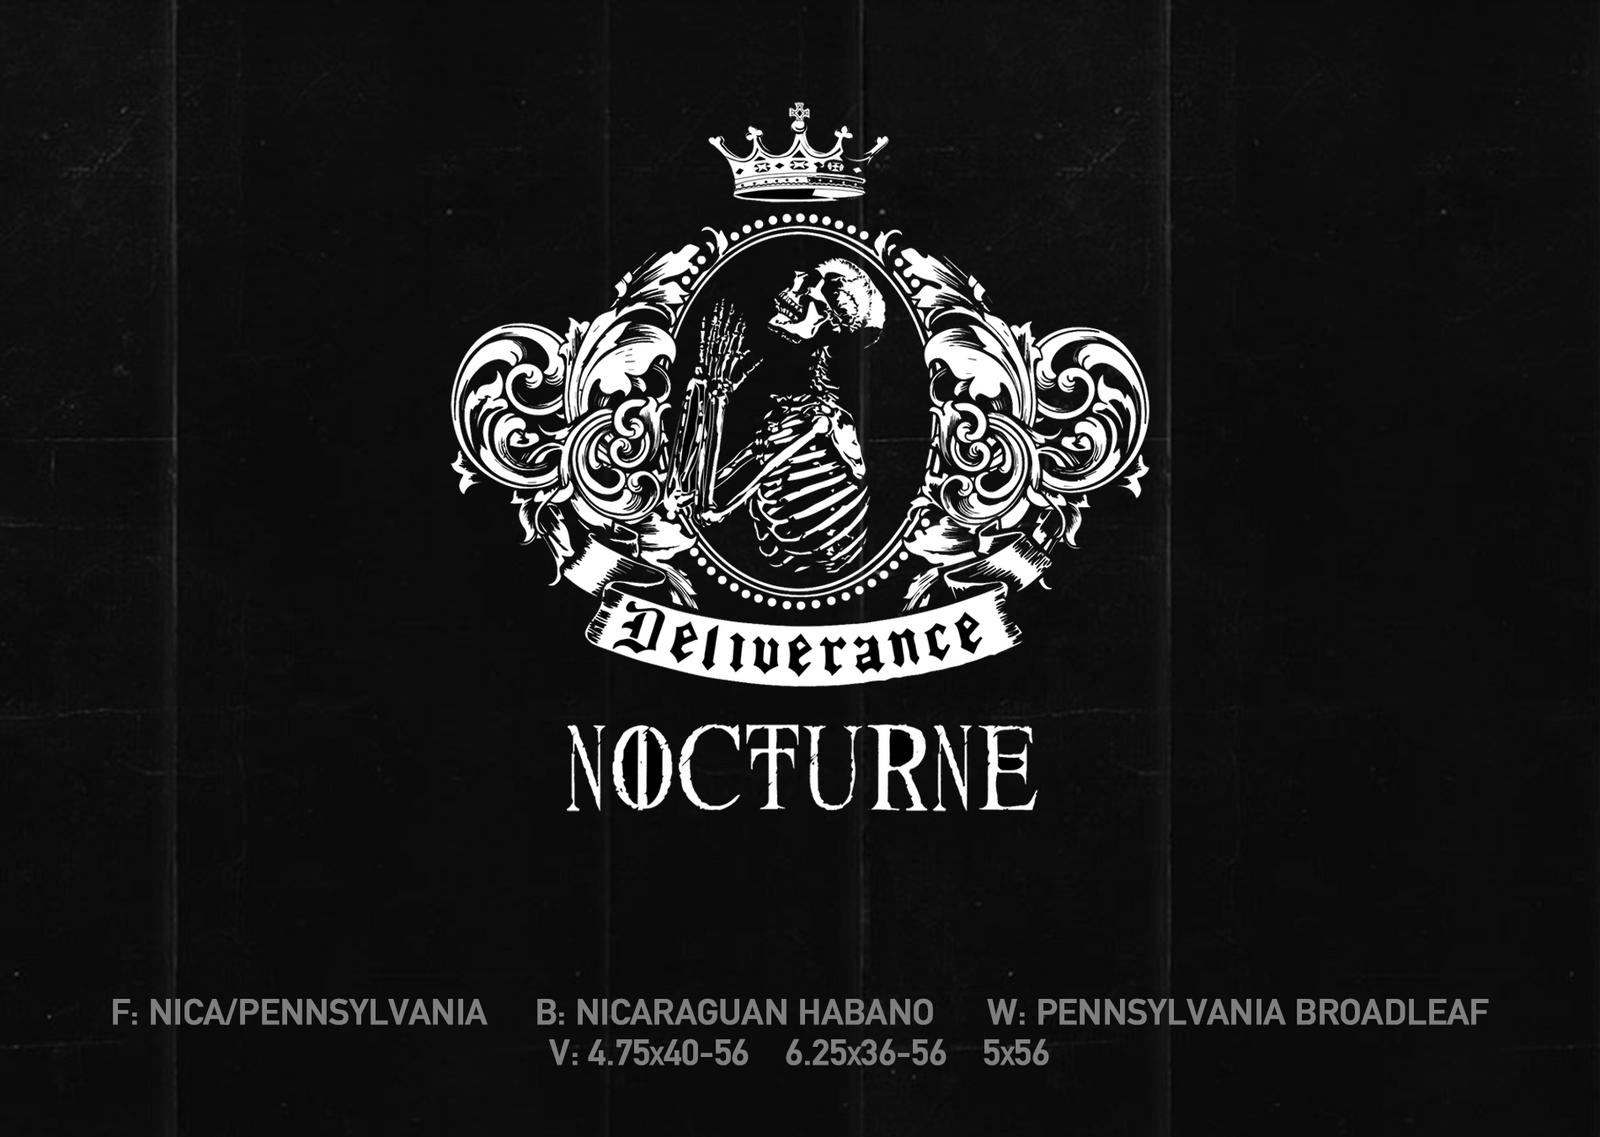 Black Label Trading Company Deliverance Nocturne Cigar